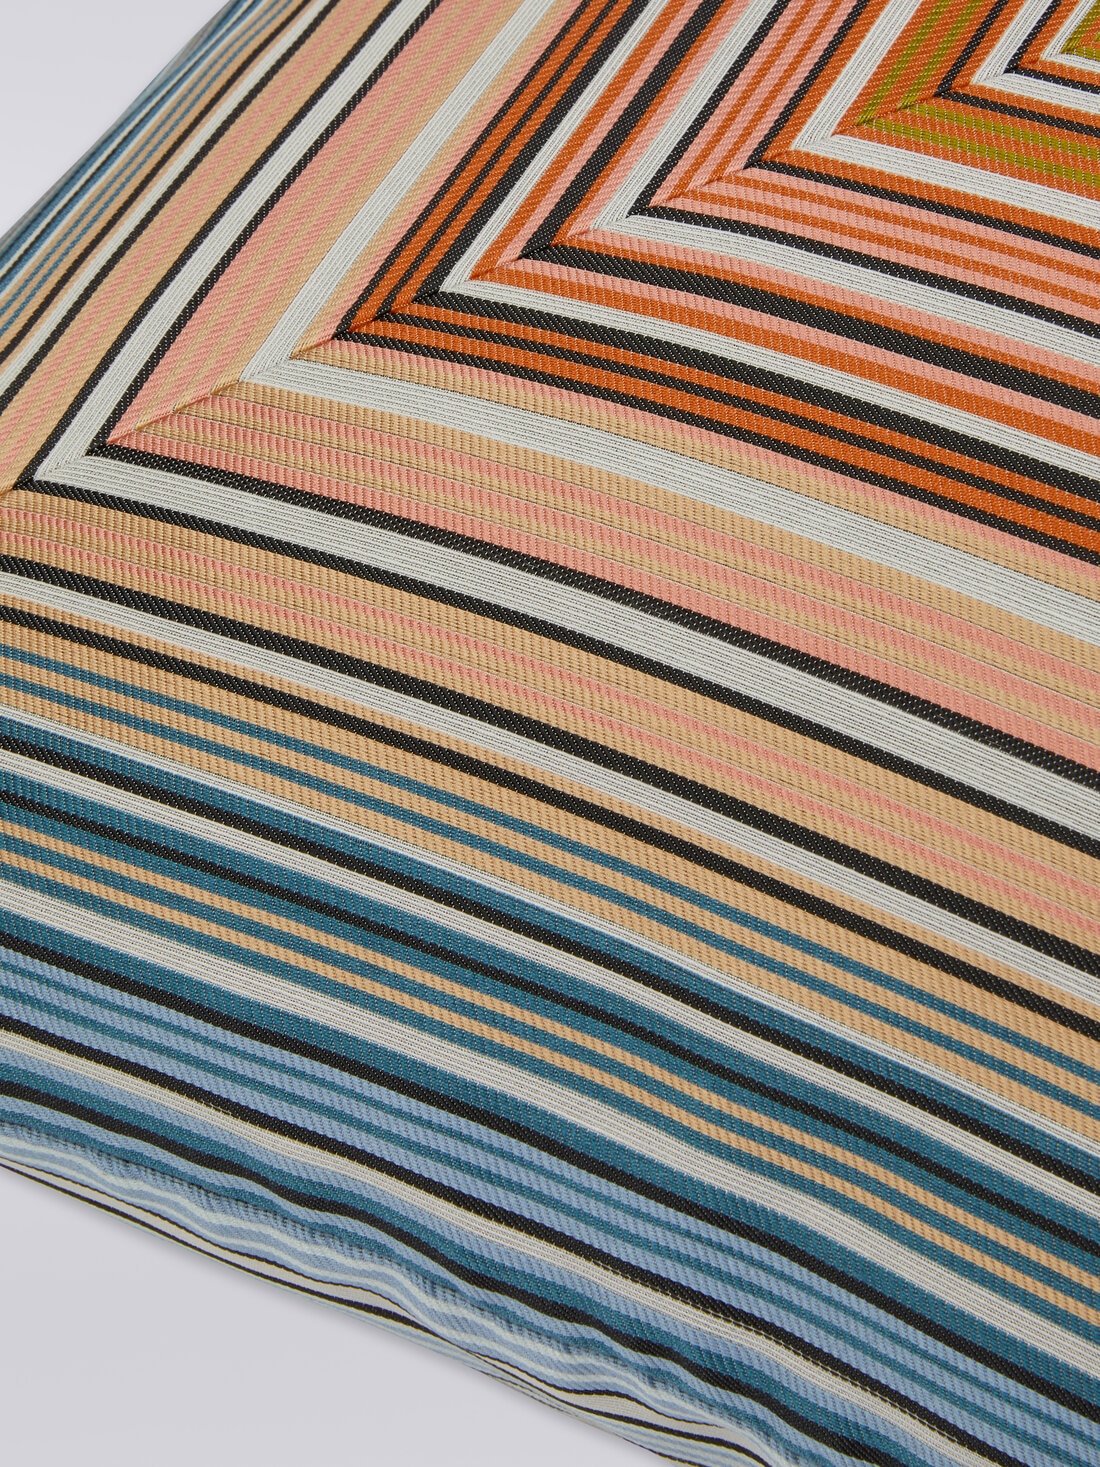 Brighton cushion 60x60 cm, Multicoloured  - 8051275607465 - 2